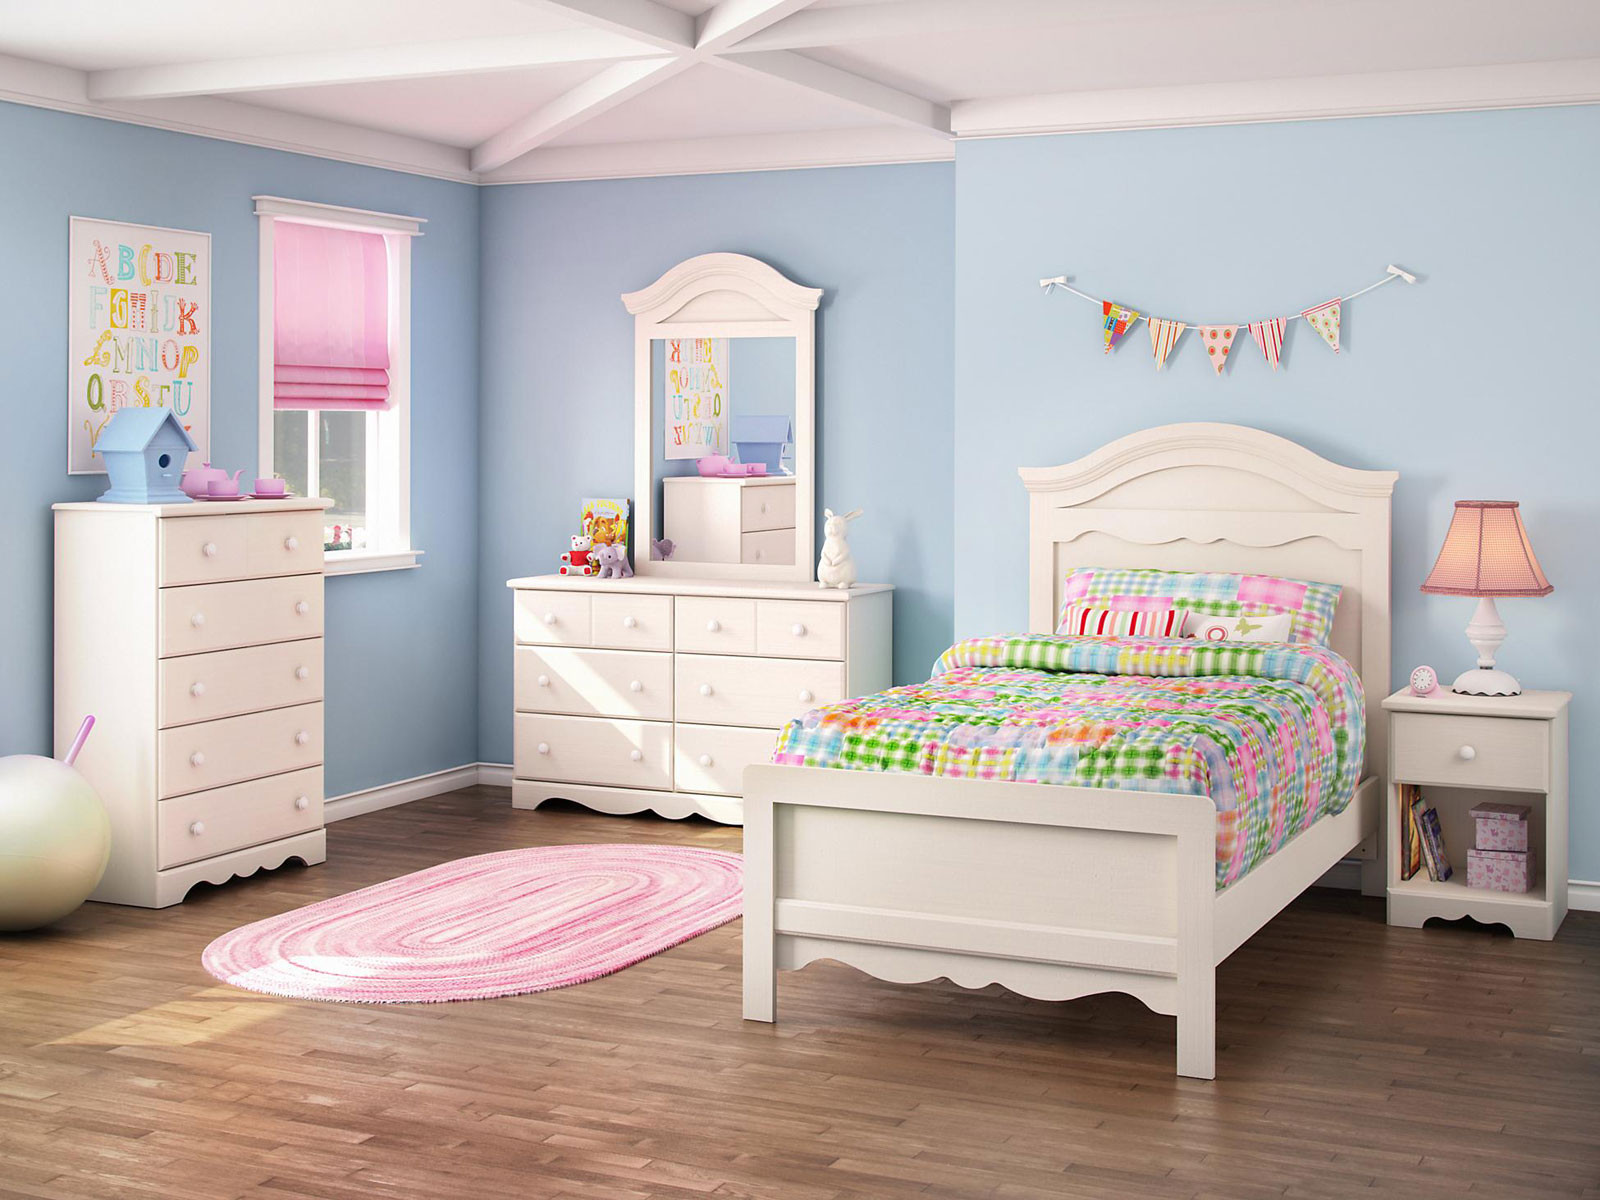 Girl Bedroom Furniture
 Girls Bedroom Sets bining The Cute Aspects Amaza Design